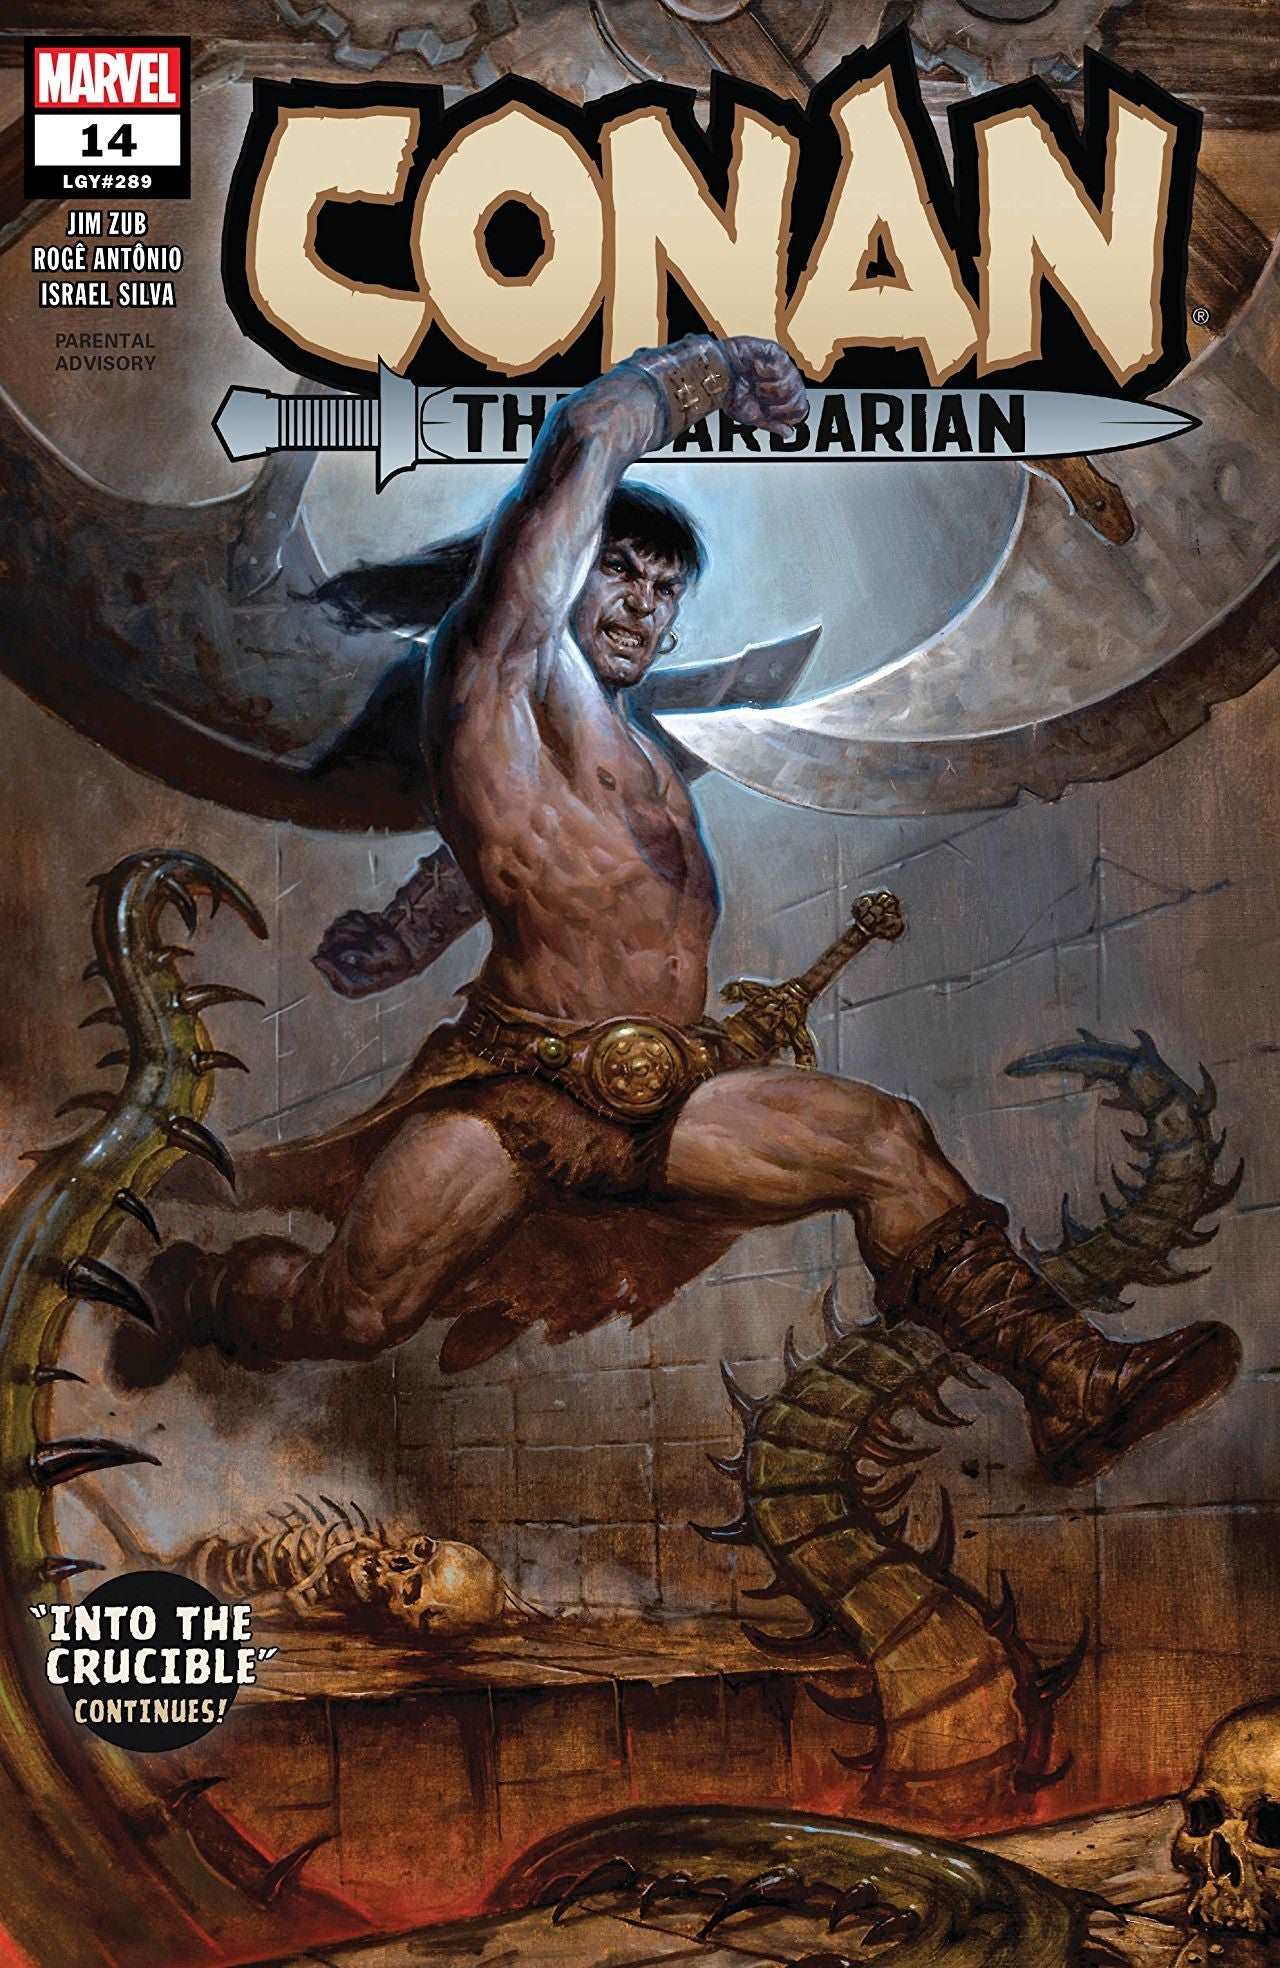 CONAN THE BARBARIAN #14 - The Comic Construct